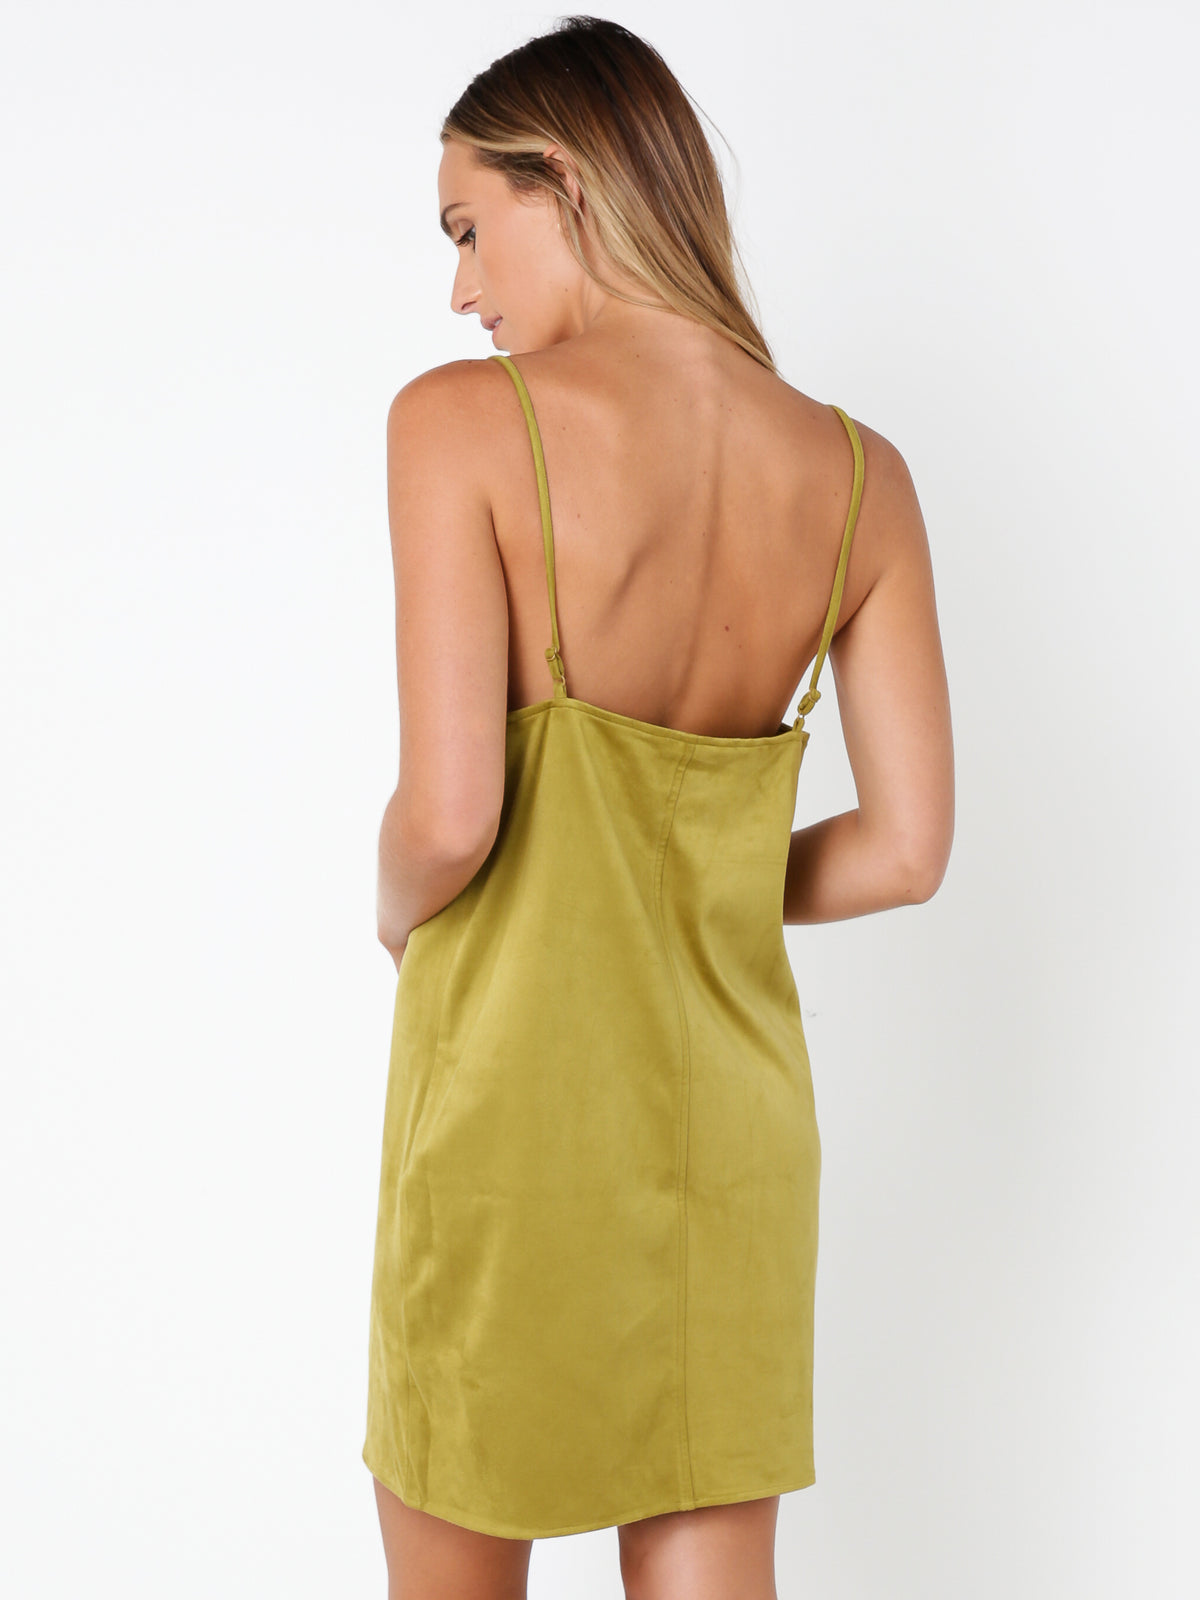 Slussen Cami Dress in Olive Green